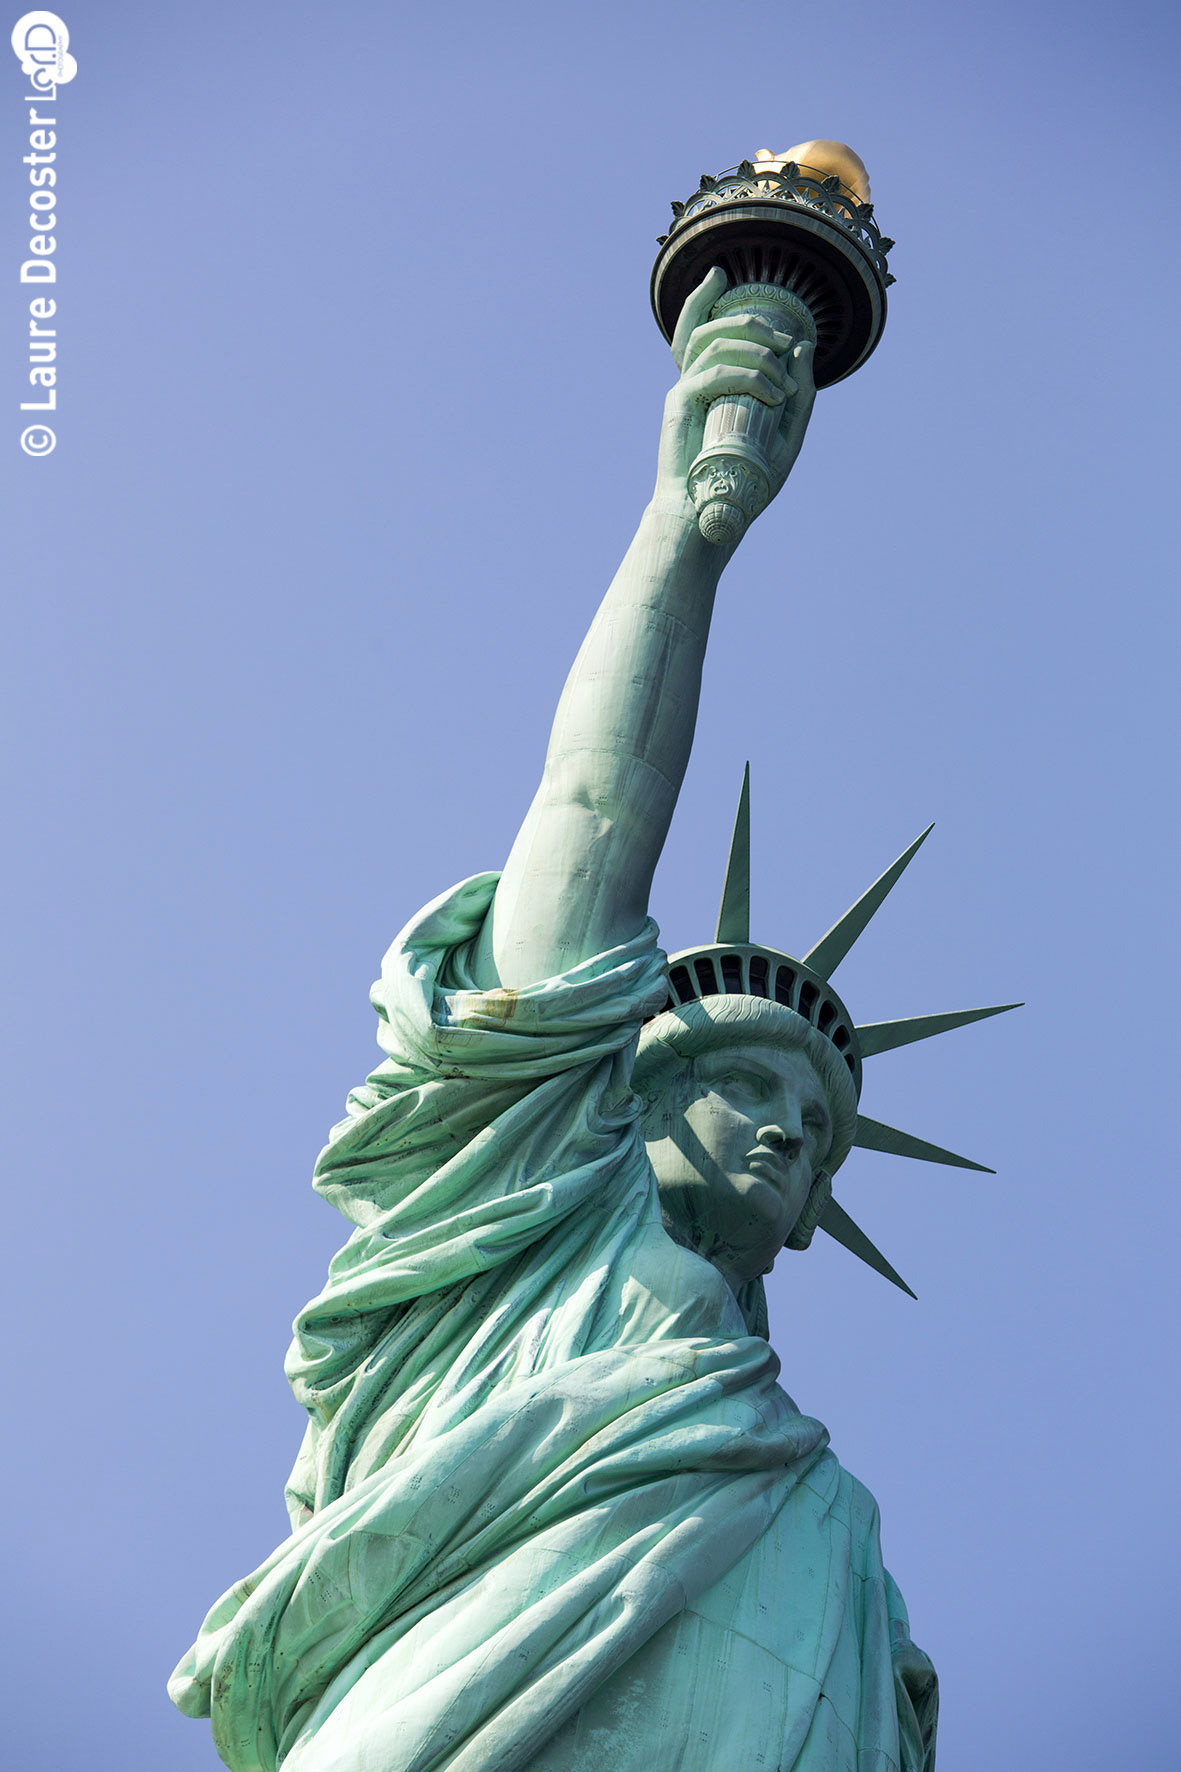 New York Manhattan statue of liberty Wall street